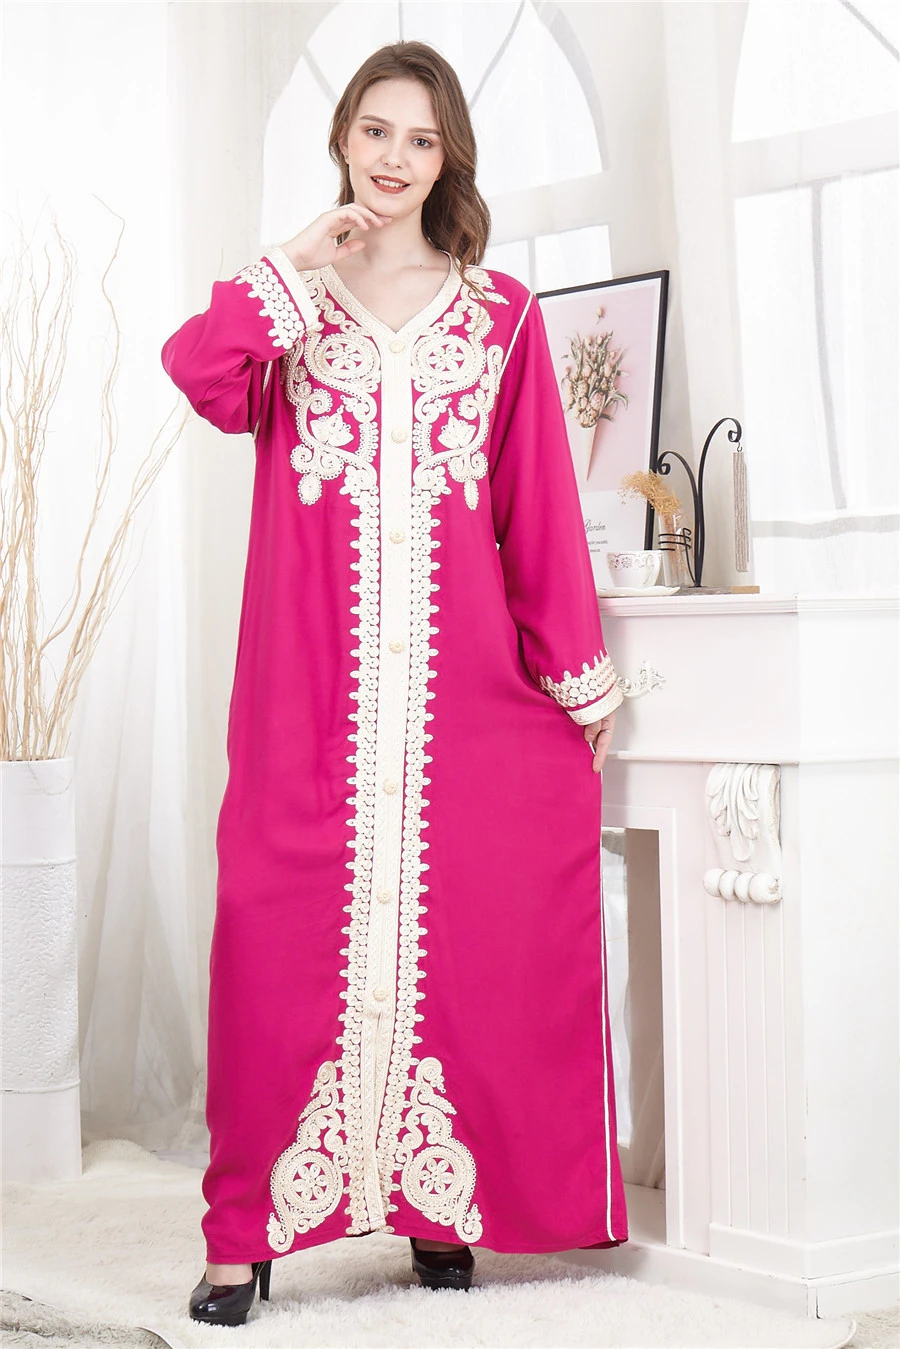 Exquisite Embroidered Beaded abaya Robe Caftan robe longue Ethnic Clothing